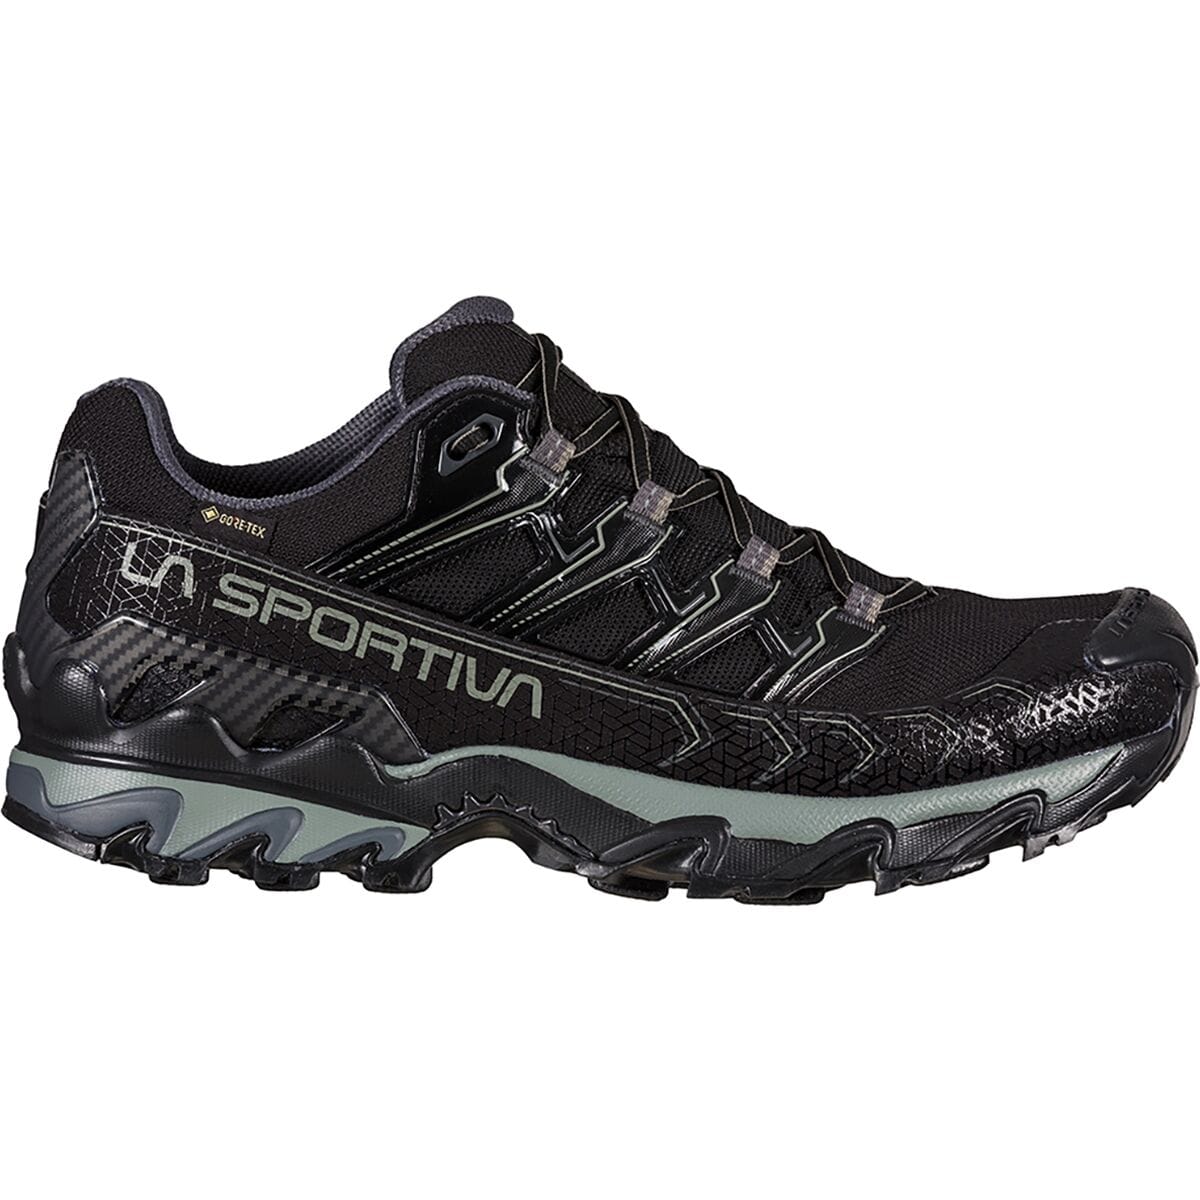 La Sportiva hiking boots & shoes: goat-worthy - www.hikingfeet.com